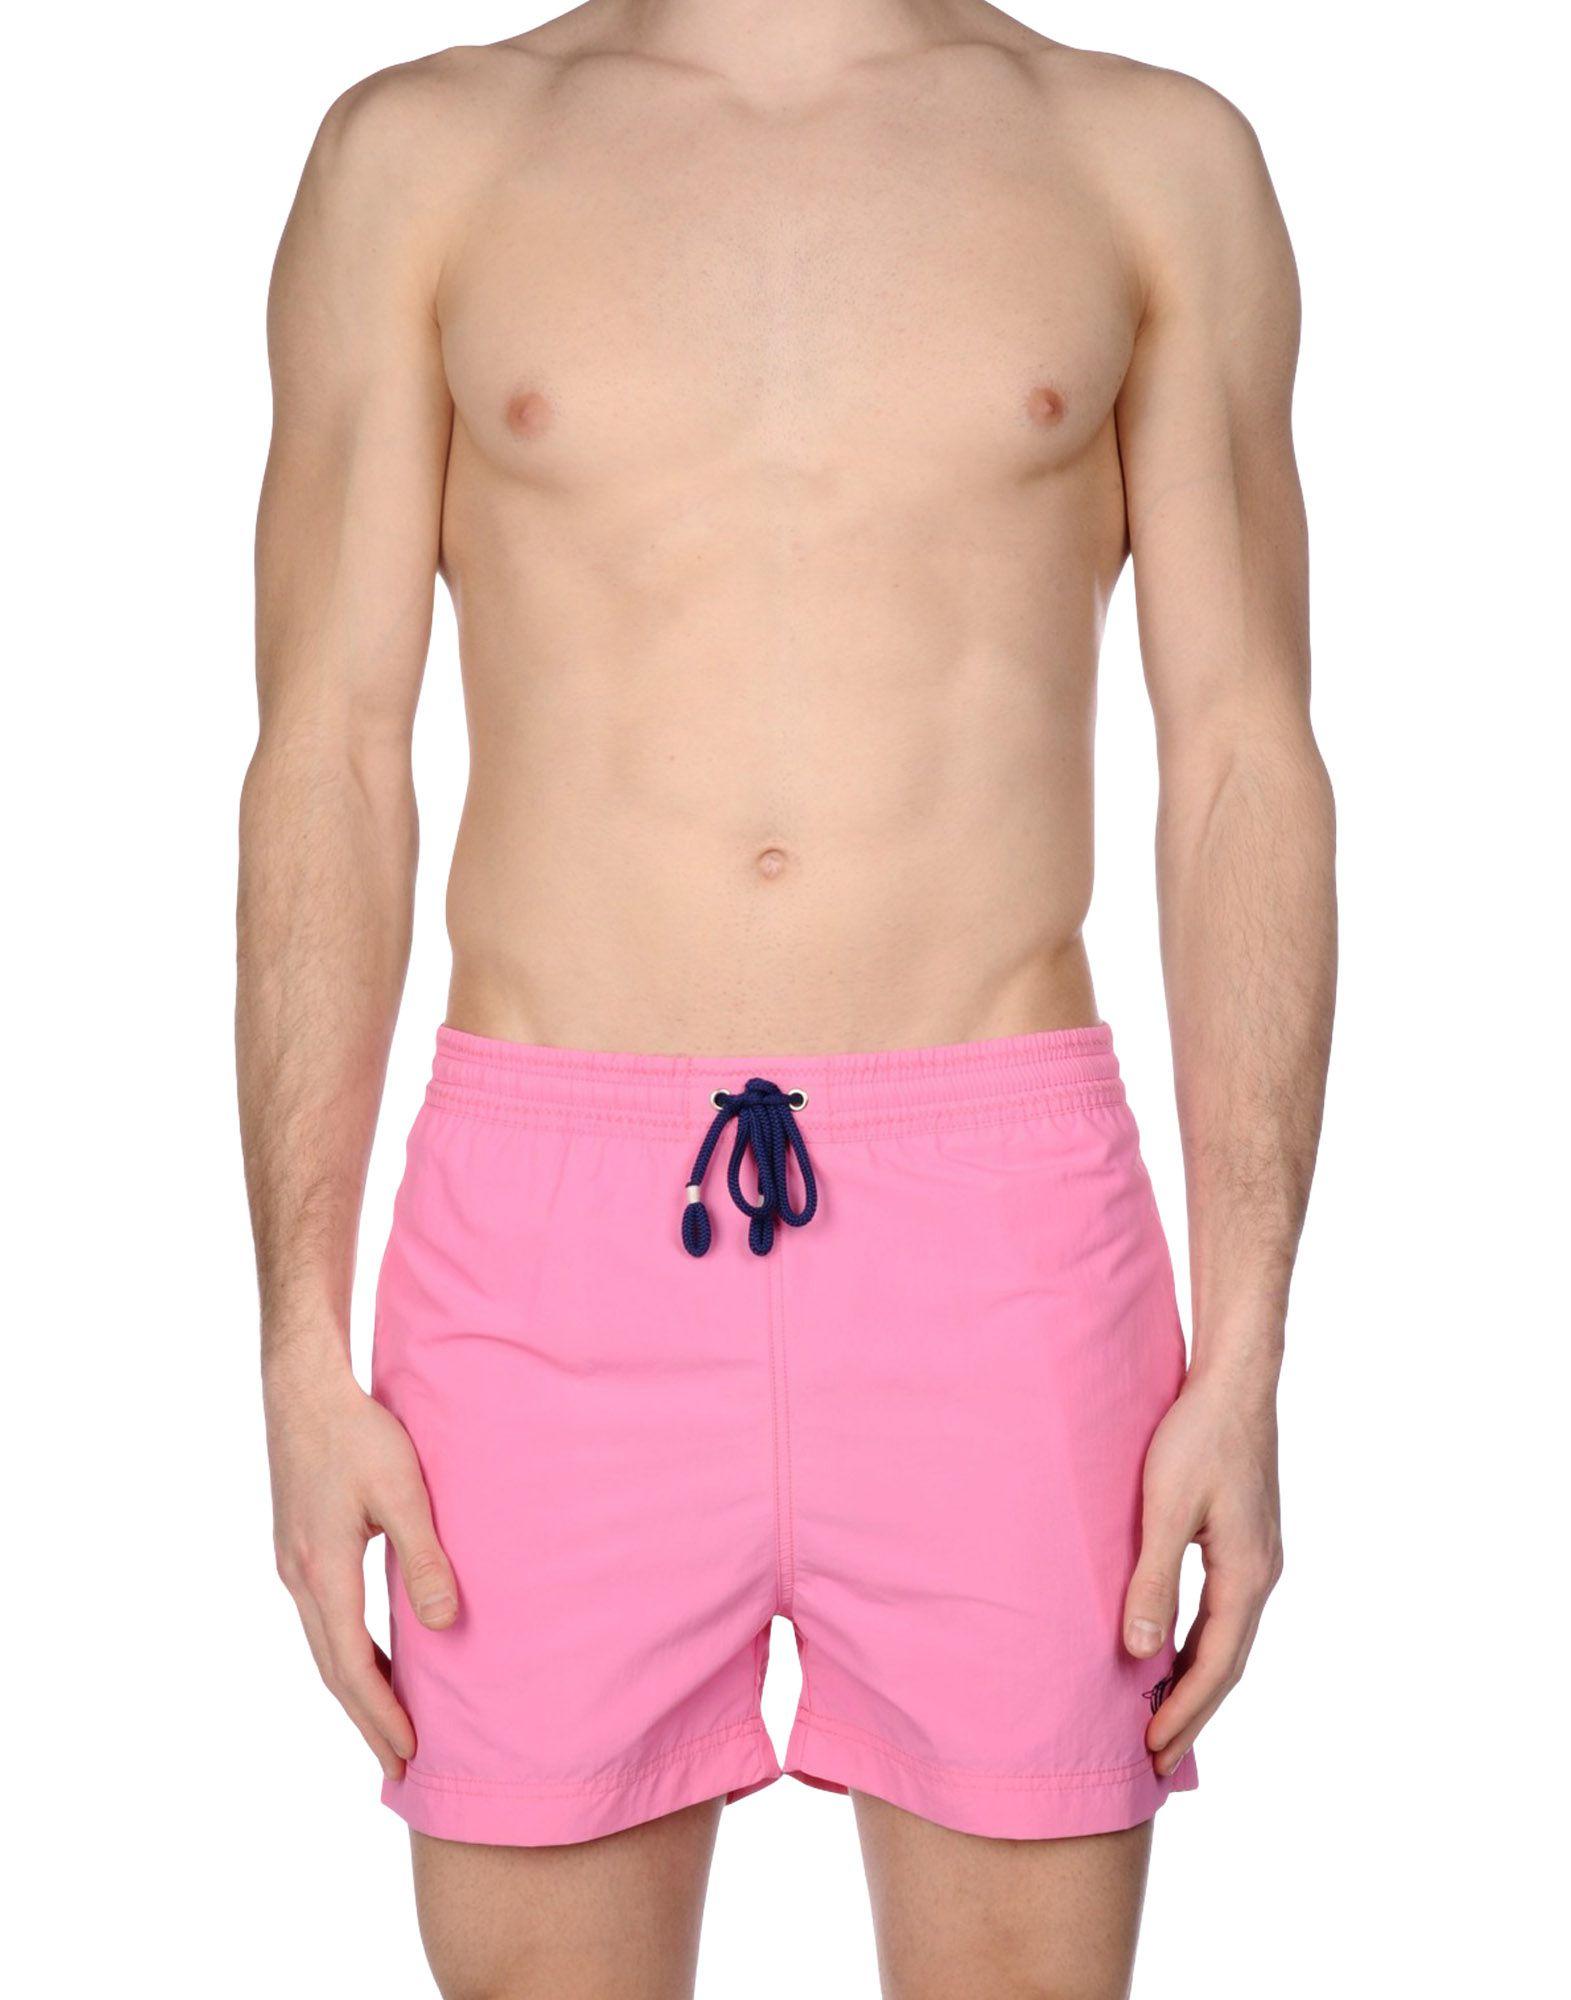 Lyst - Henry cotton's Swim Trunks in Pink for Men